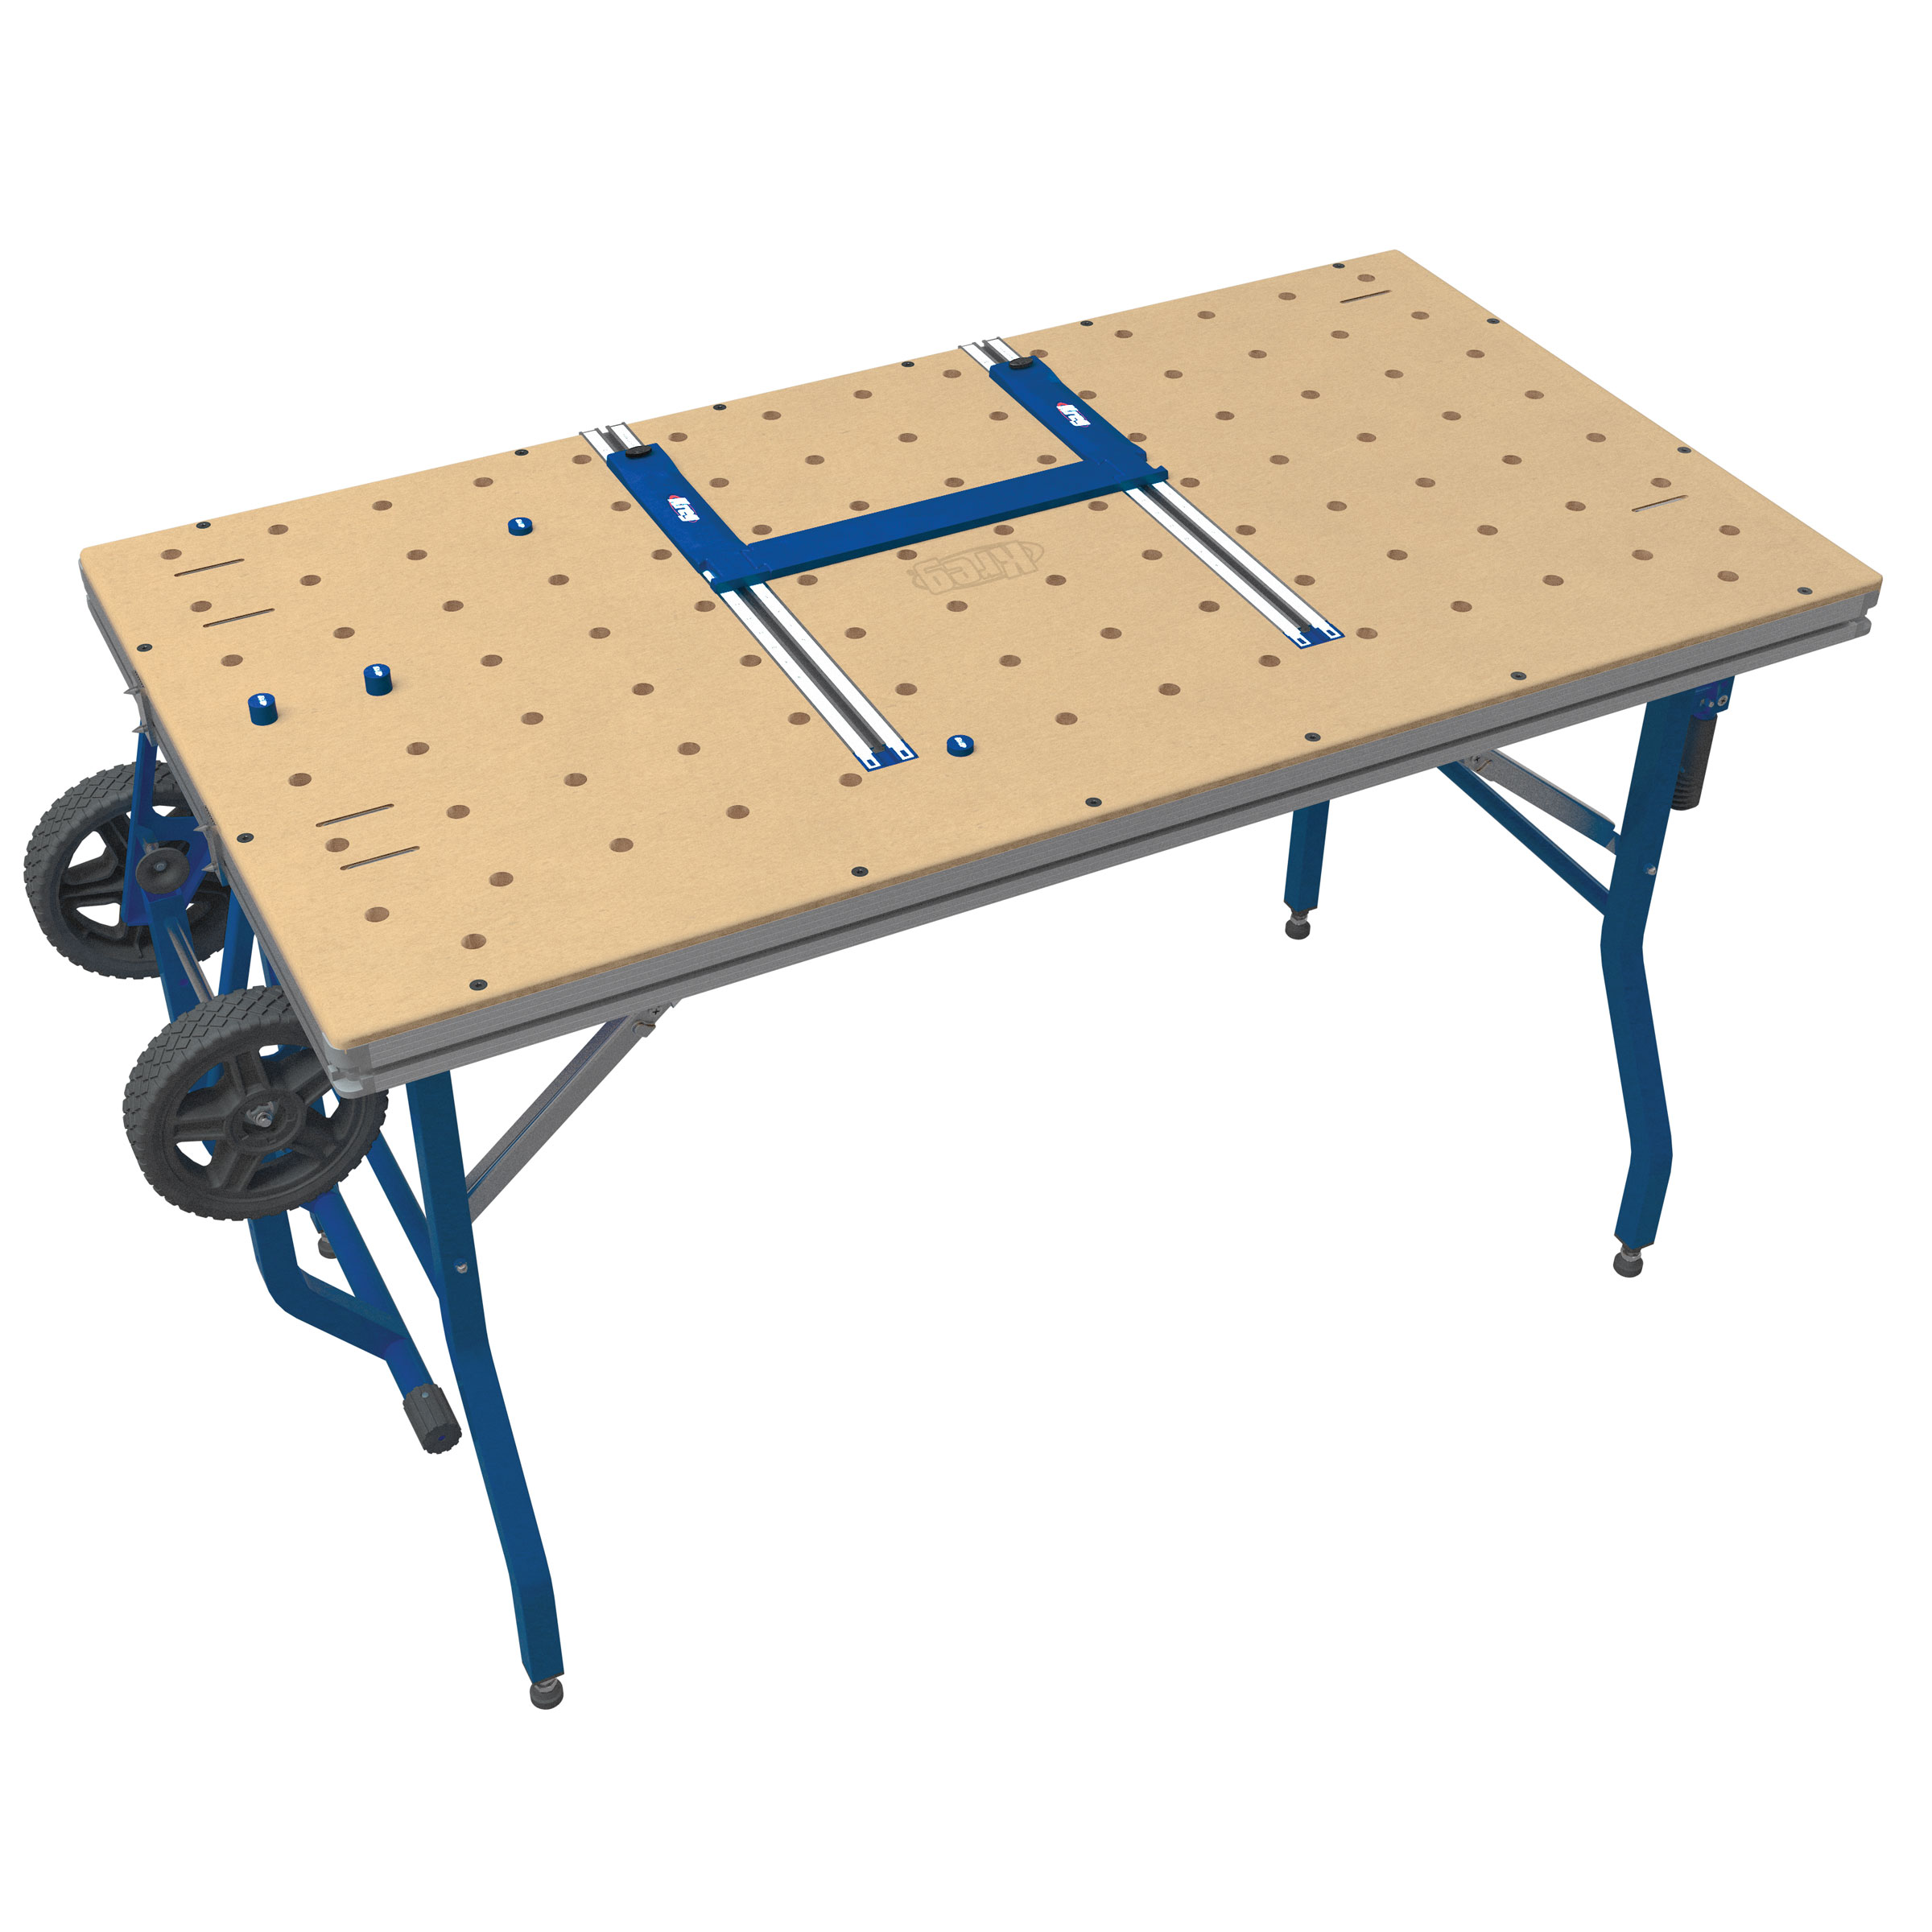 Kreg Adaptive Cutting System Project Table Kit